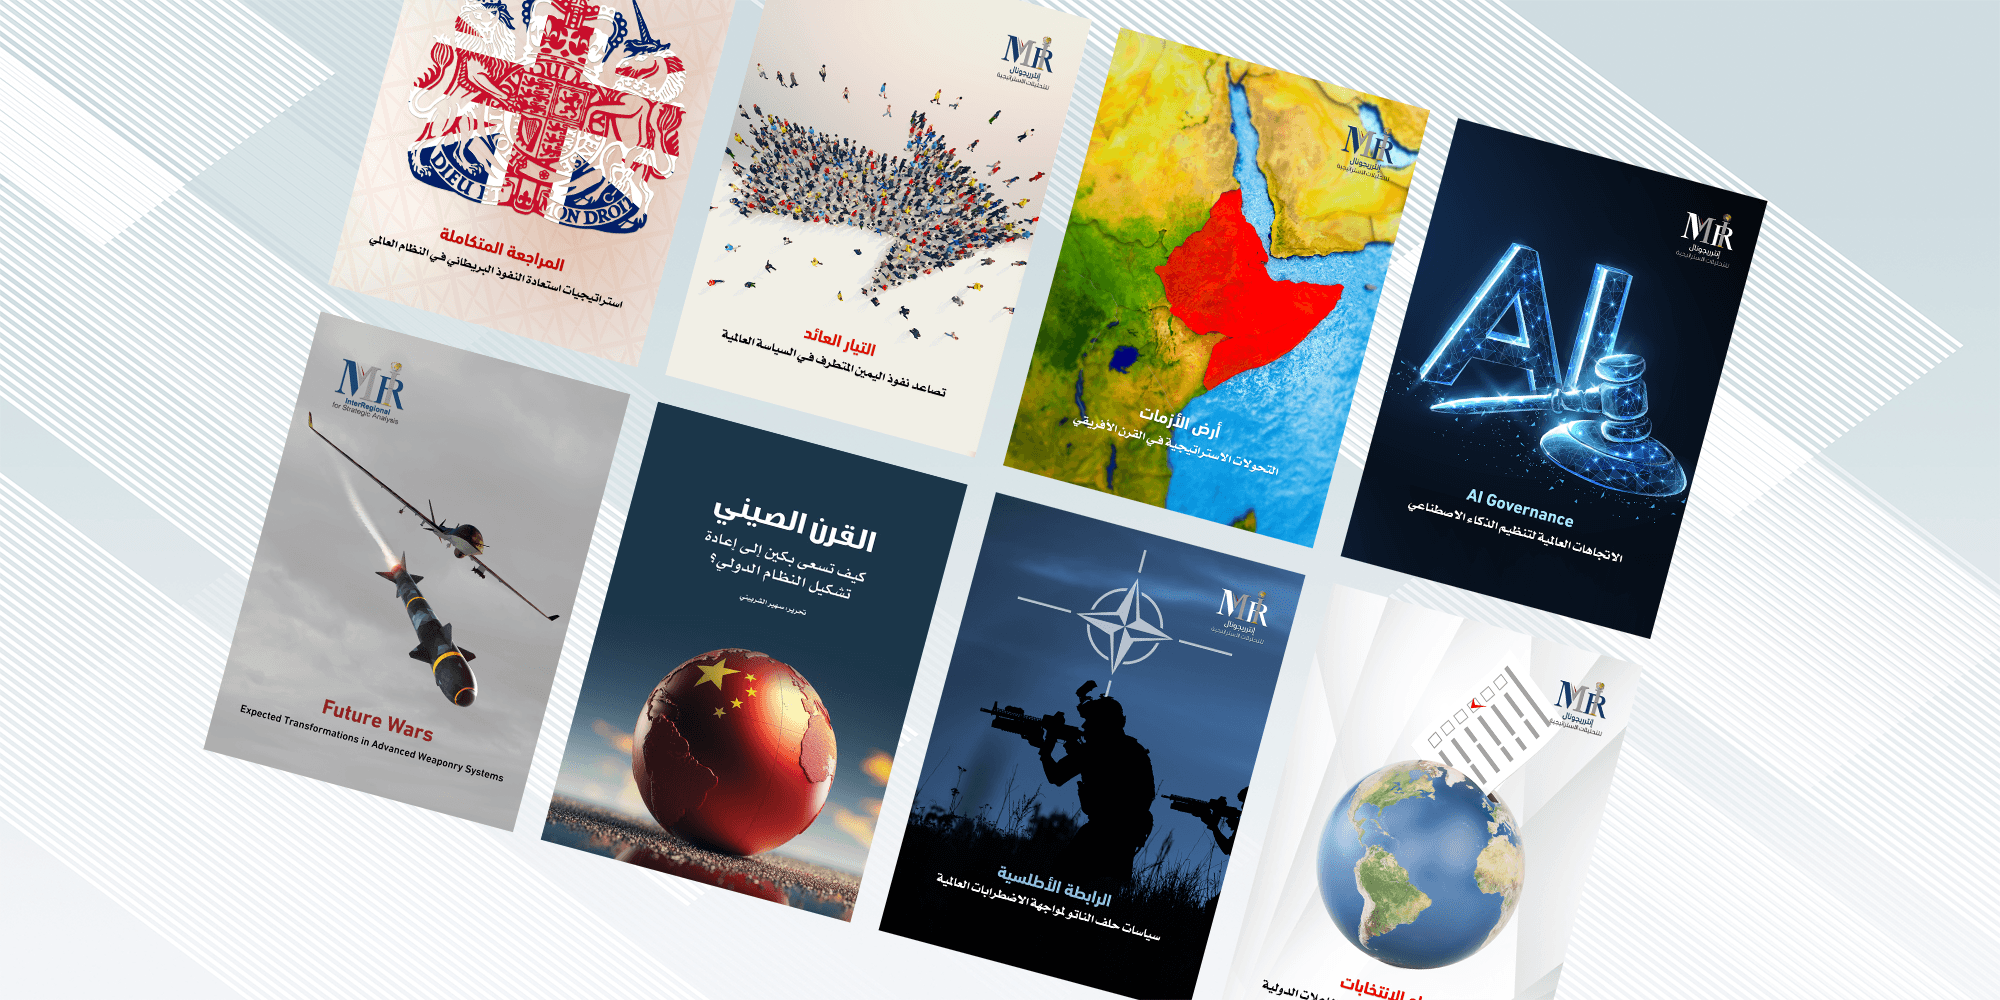 InterRegional Publishes Eight New Books at the Abu Dhabi International Book Fair